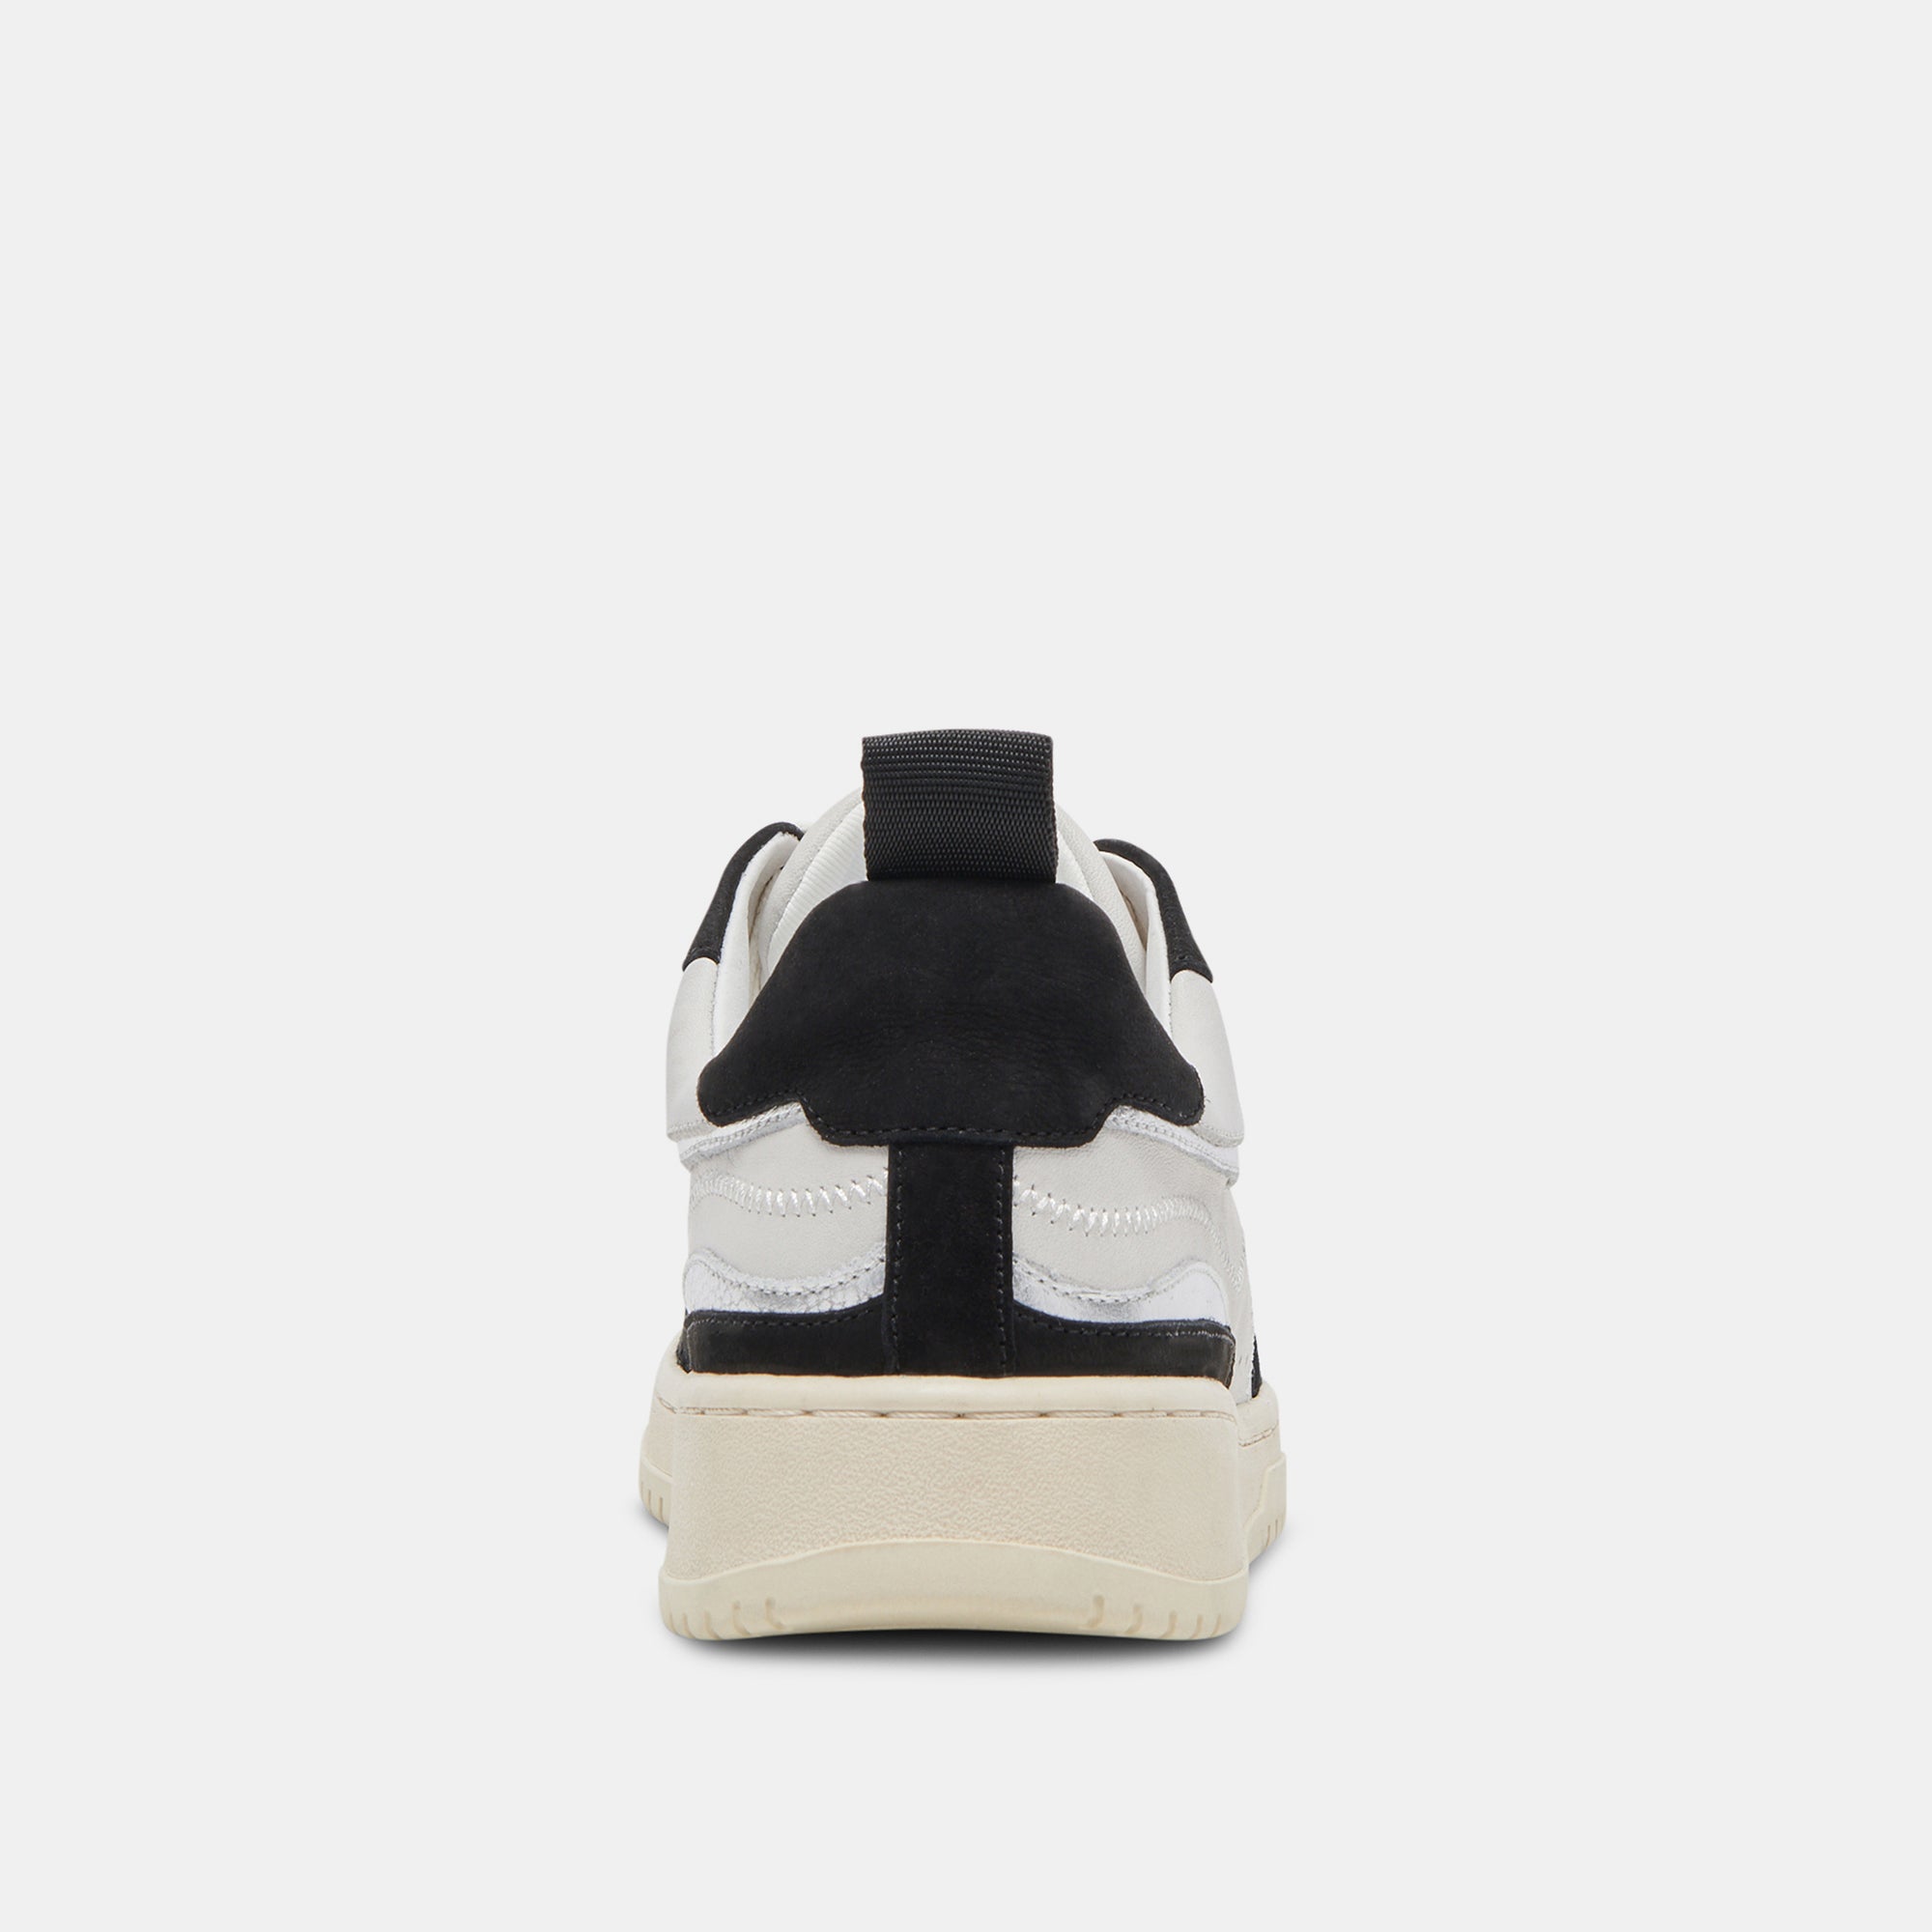 Adella Sneakers White Black Leather